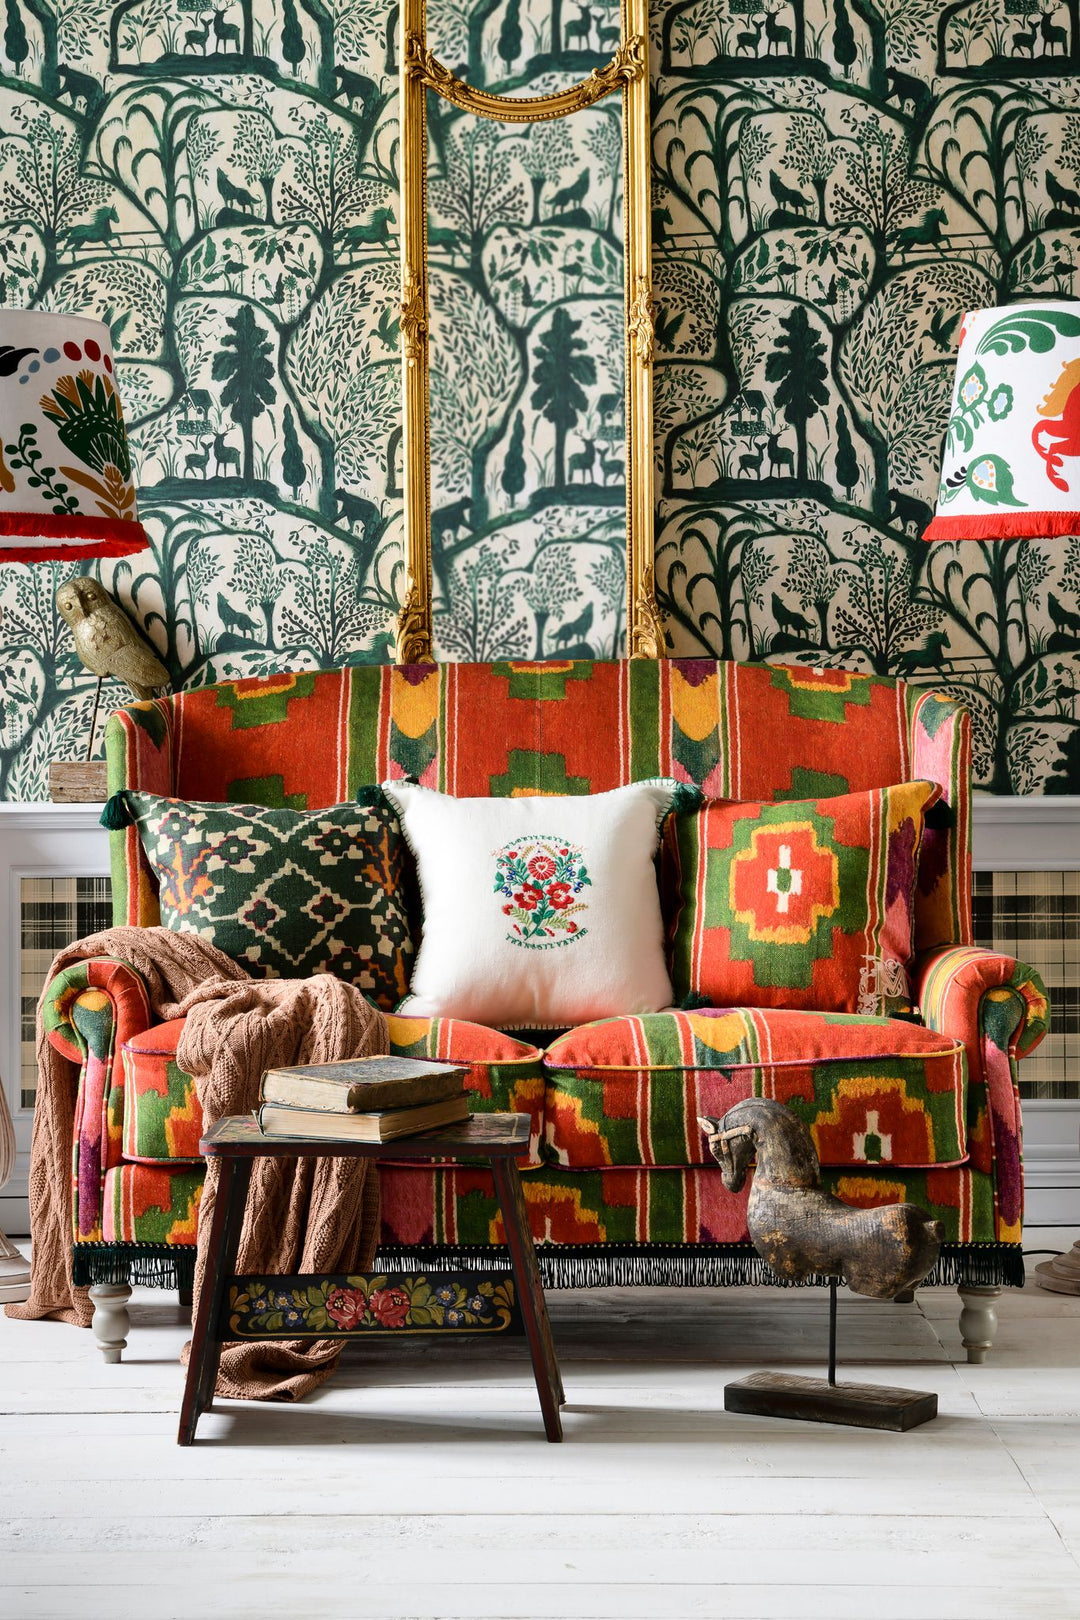 abigail-mind-the-gap-sofa-multi-coloured-linen-fabric-green-fringing-ikat-print-design